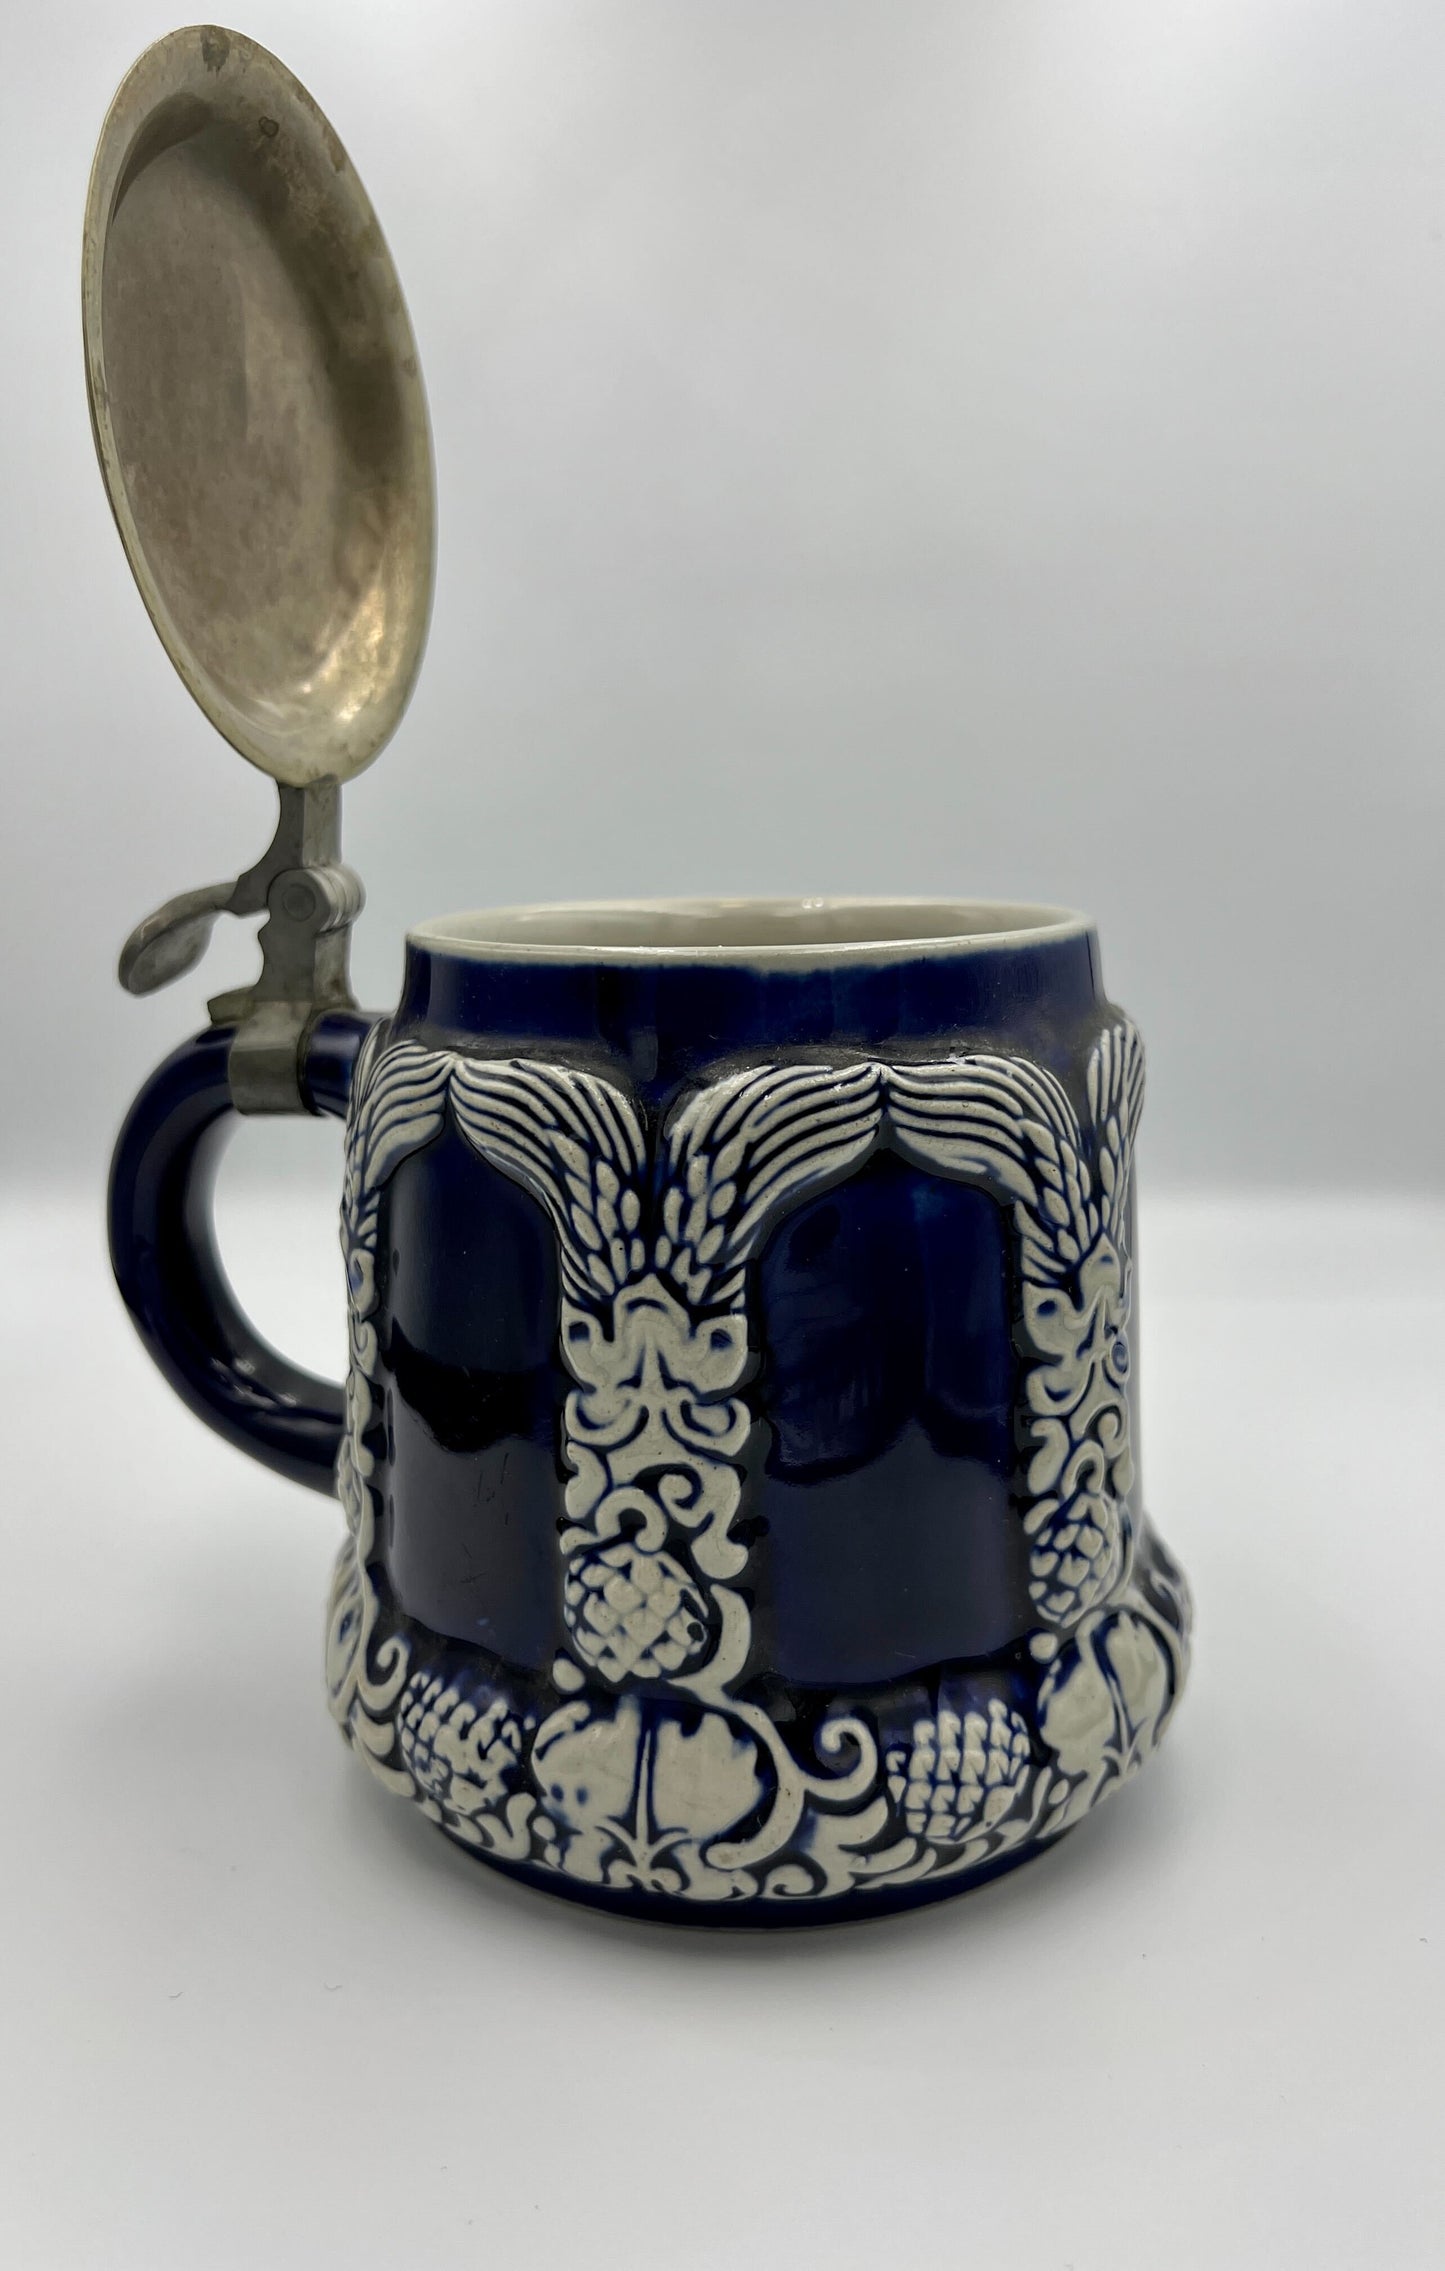 Antique beer mug in blue with metal cap